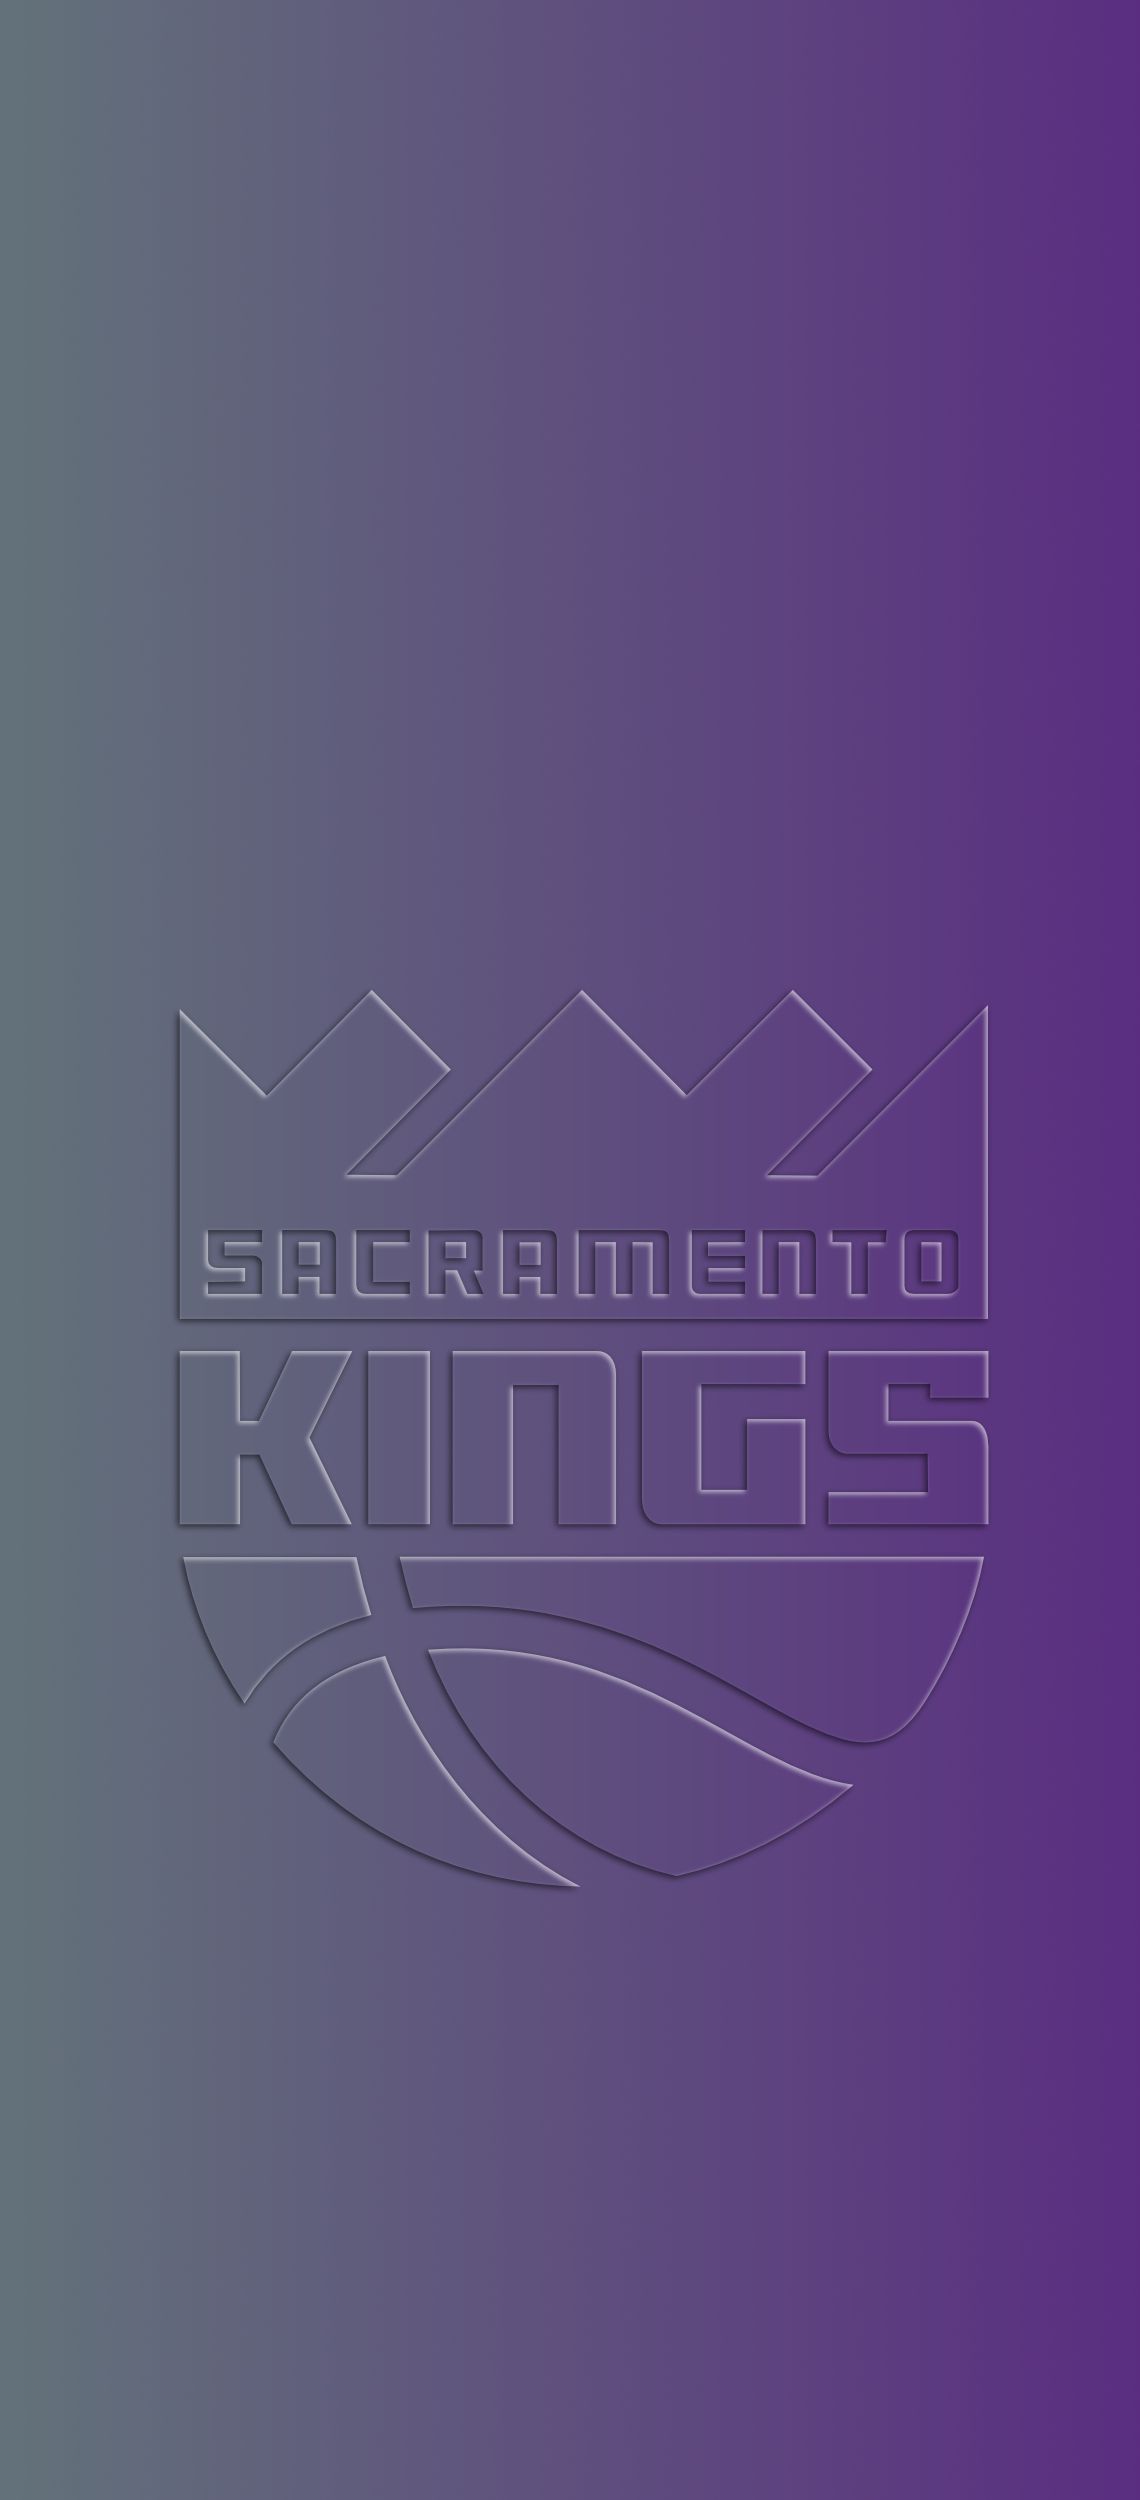 NBA Basketball Team Sacramento Kings 3D phone Wallpaper. Sacramento kings, Nba basketball teams, Sacramento